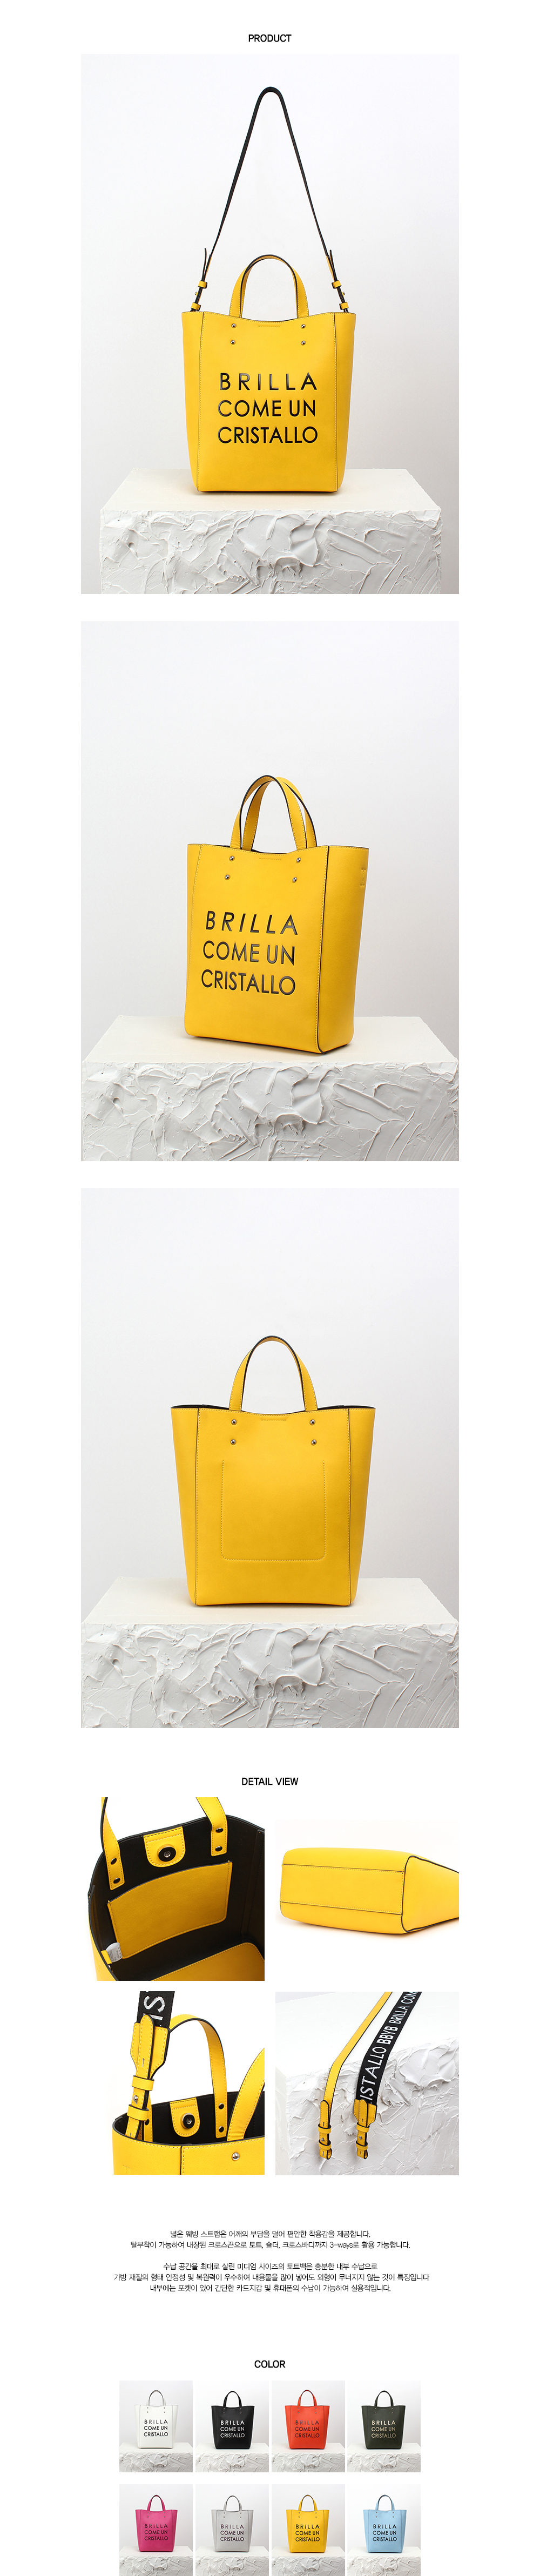 BBYB MARCE Tote Bag (Sunnyside Yellow)